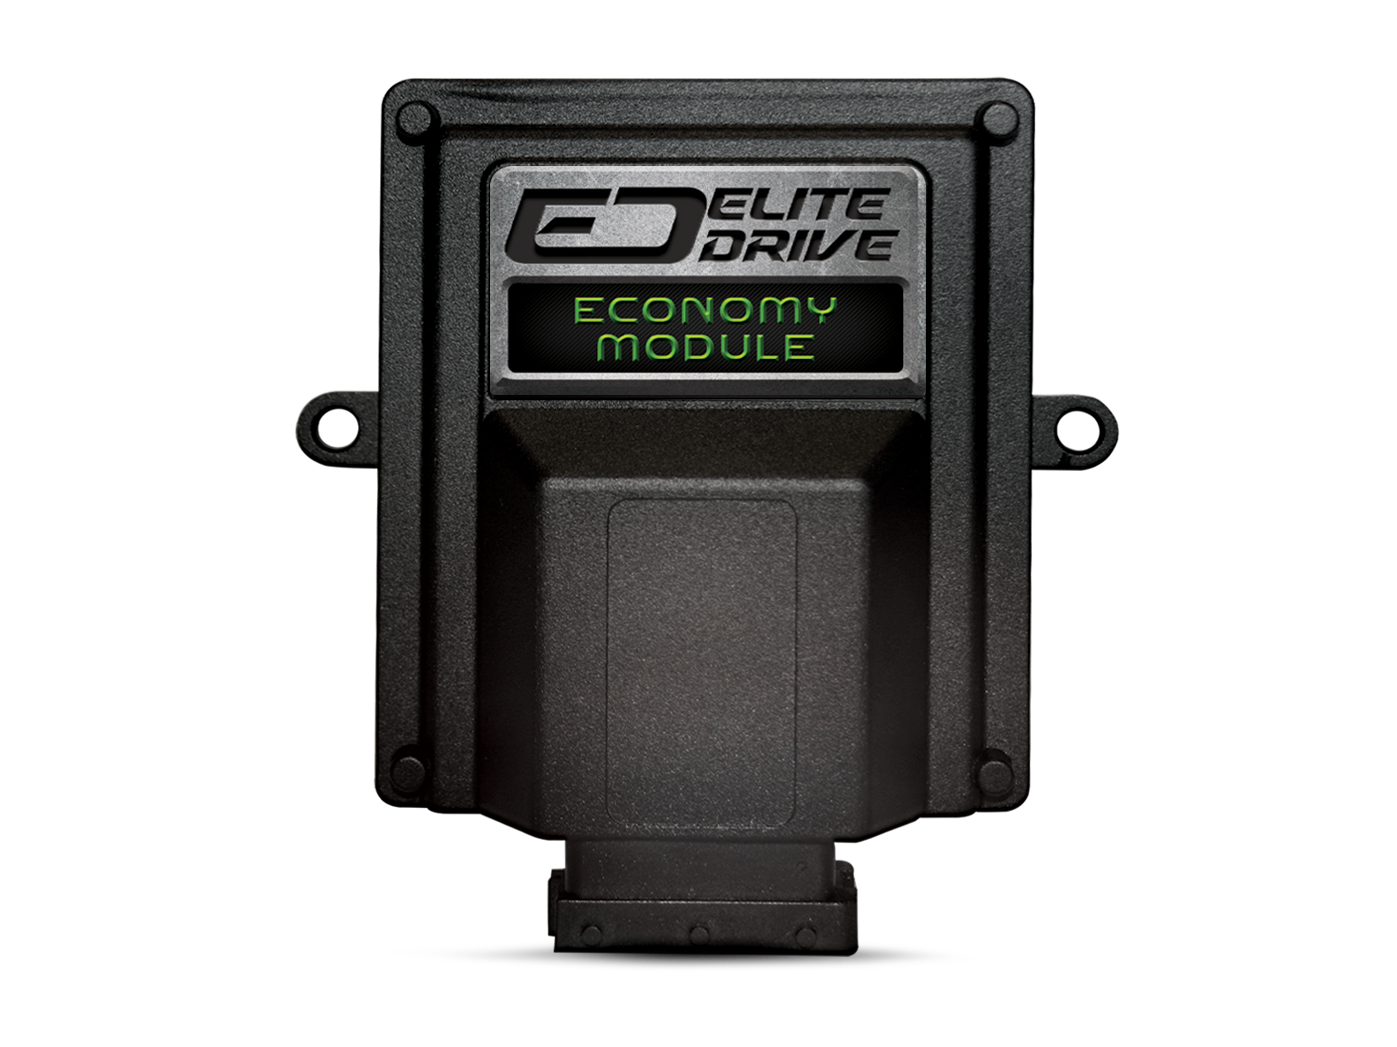 EliteDrive Diesel Economy Power Module suits Isuzu Dmax